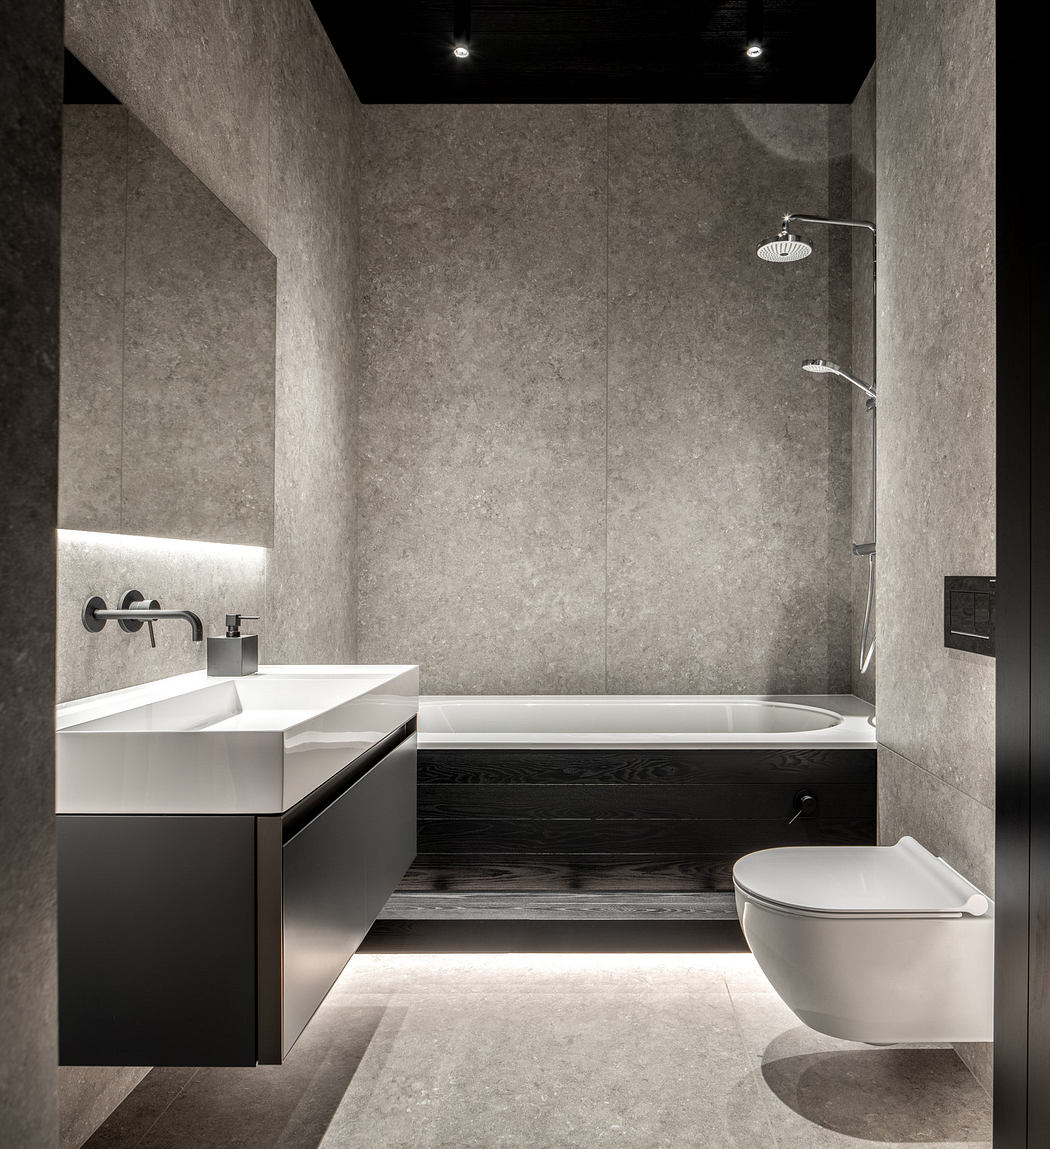 Minimalist bathroom with neutral tones and sleek fixtures.